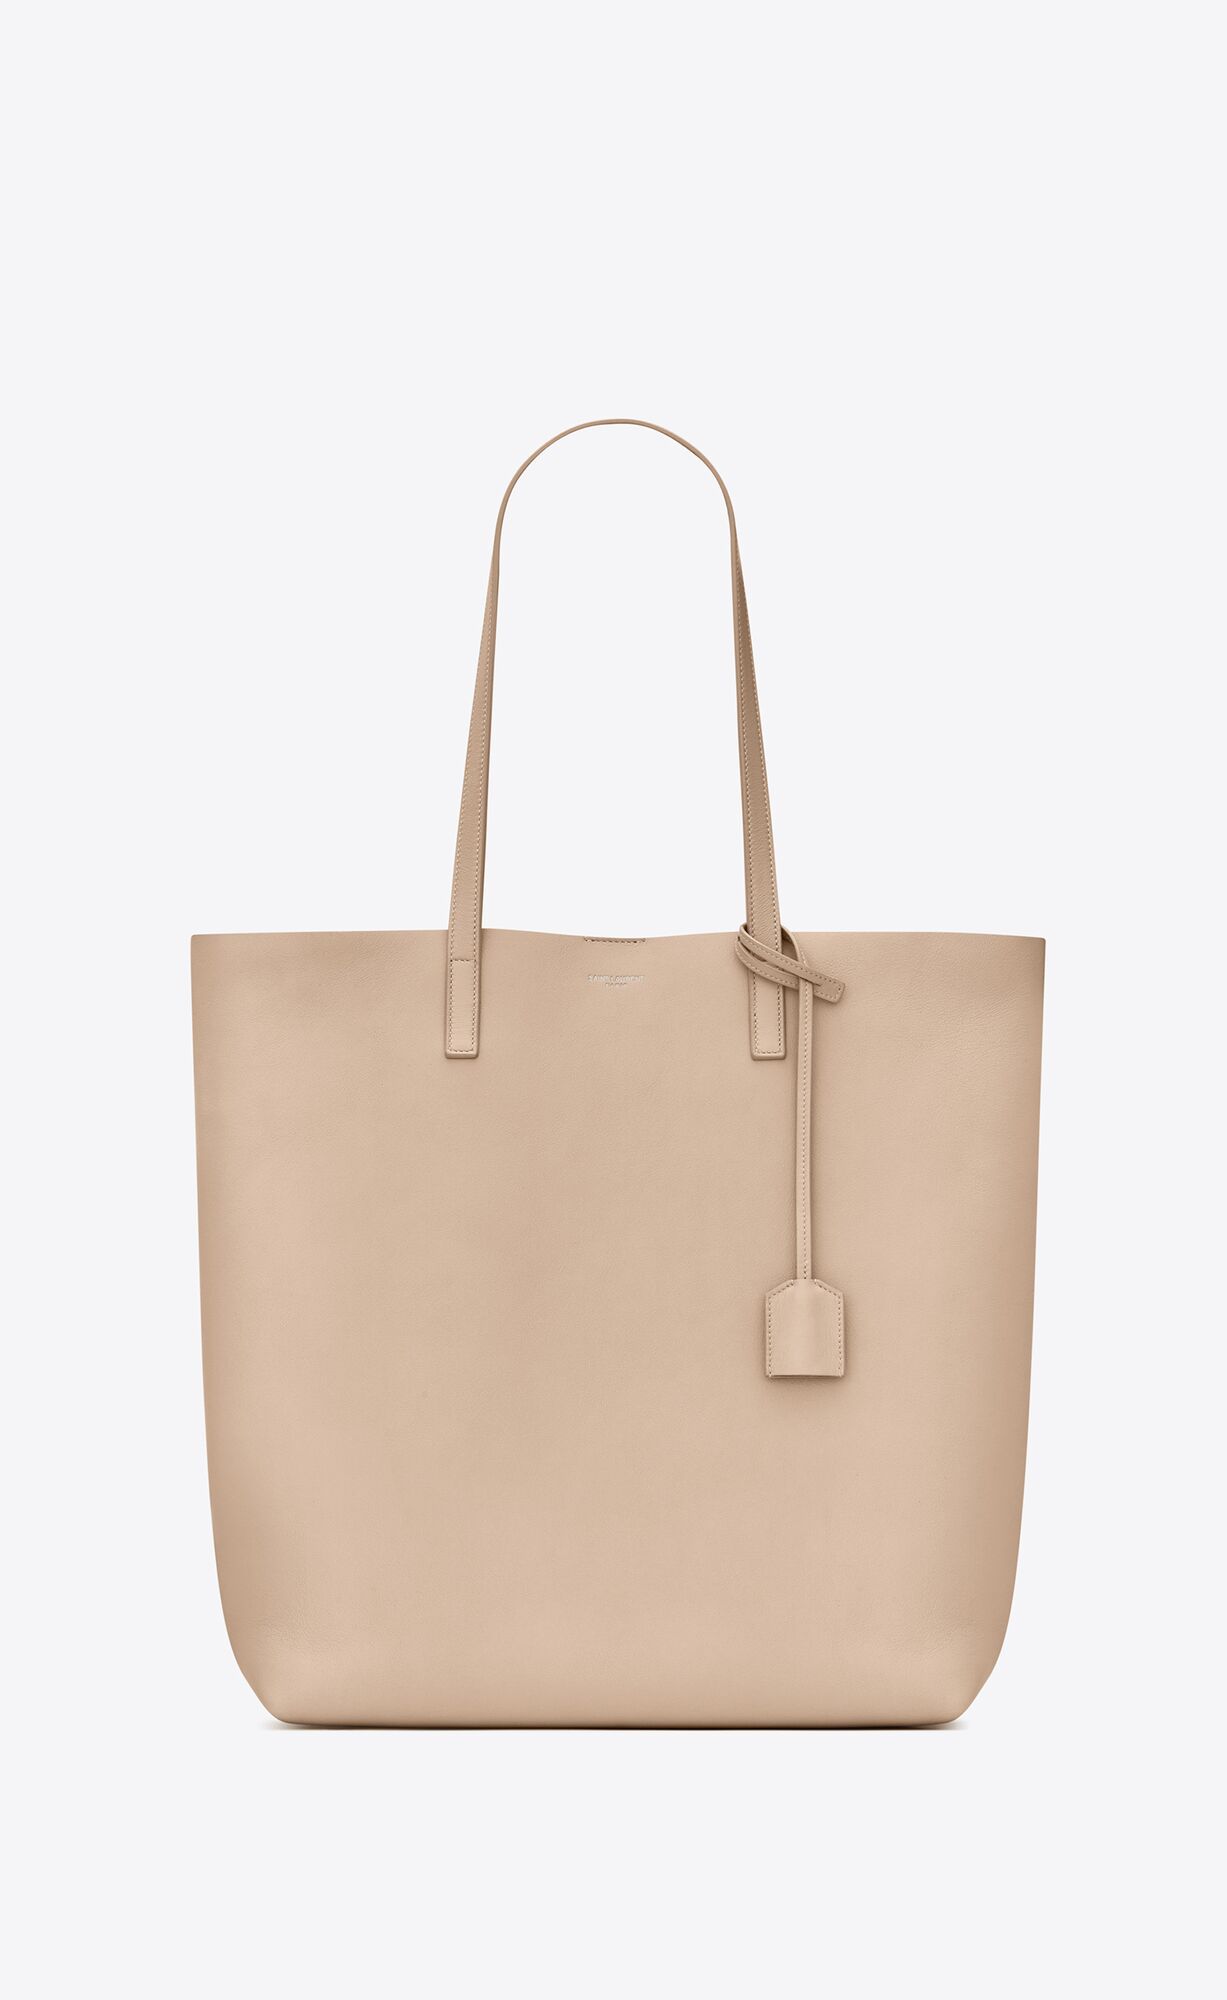 shopping bag saint laurent N/S in supple leather | Saint Laurent | YSL.com | Saint Laurent Inc. (Global)